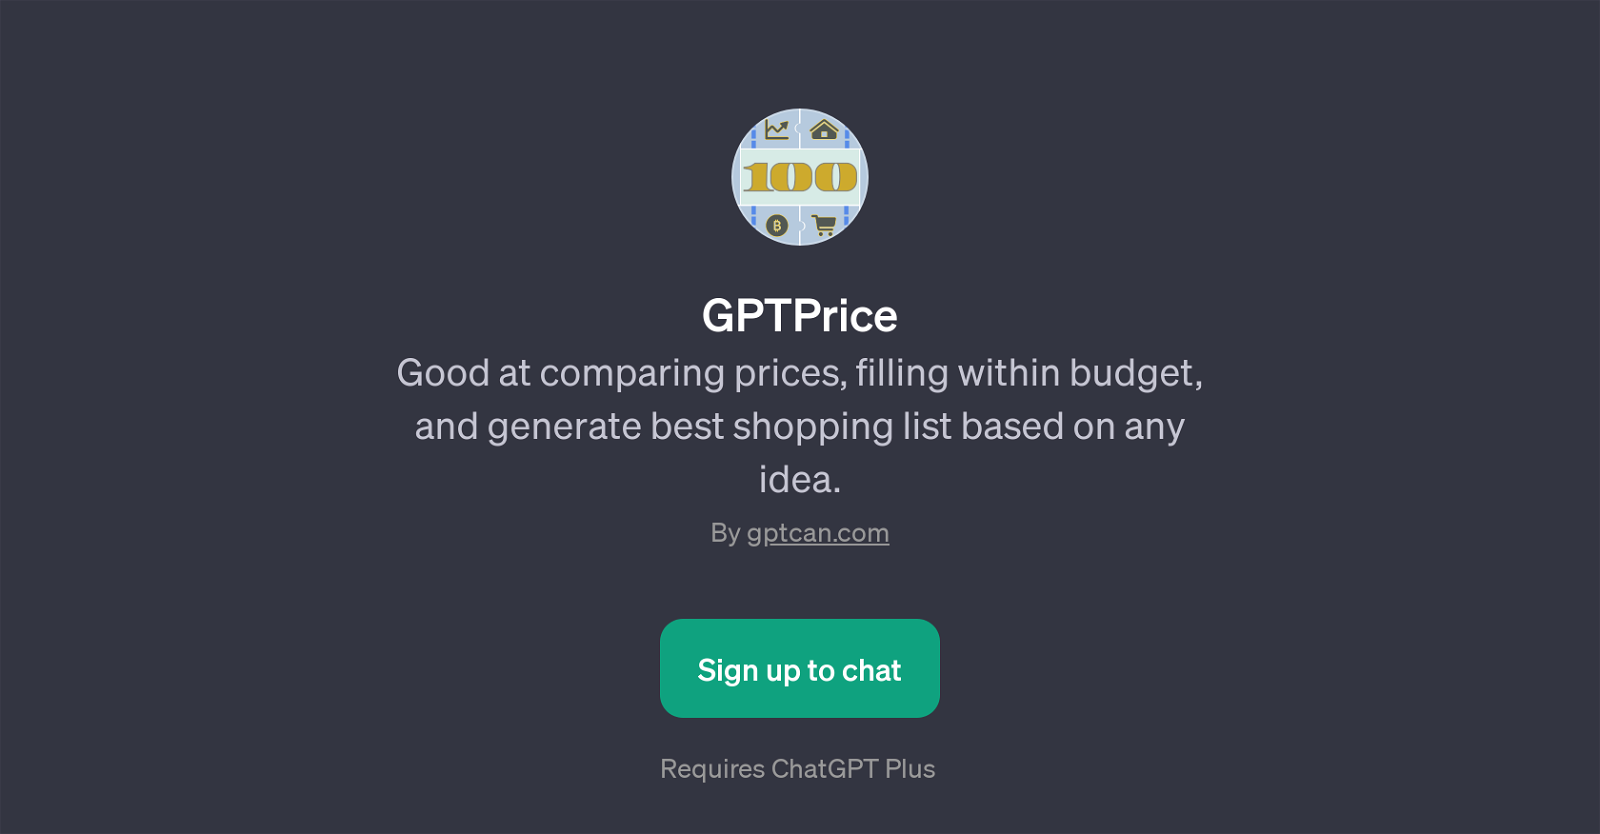 GPTPrice website